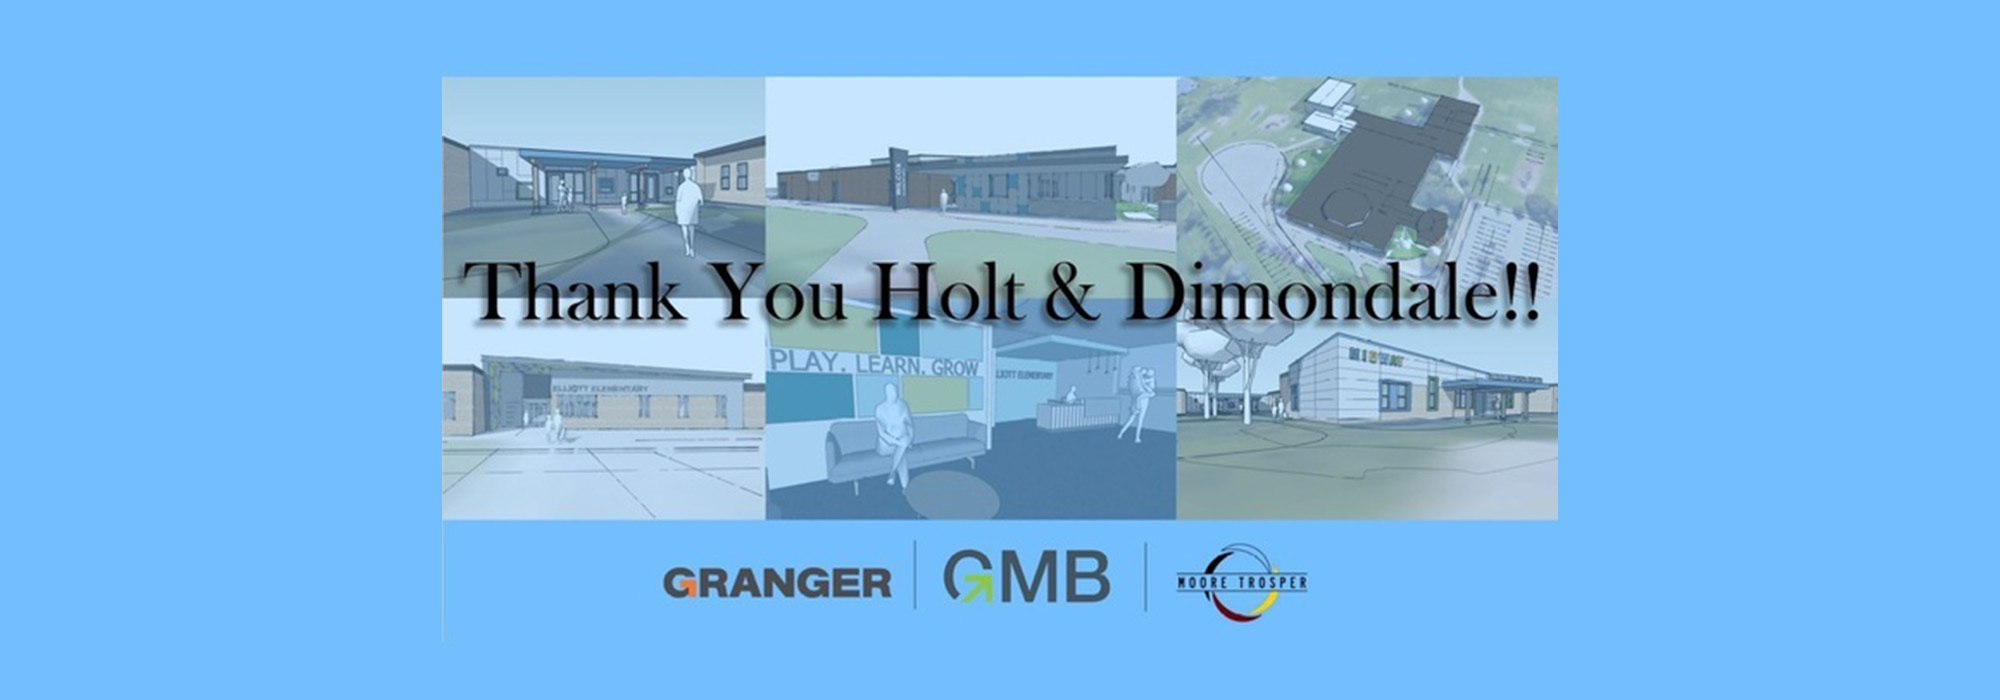 Thank you Holt & Dimondale!! - Granger, GMB, Moore Trosper